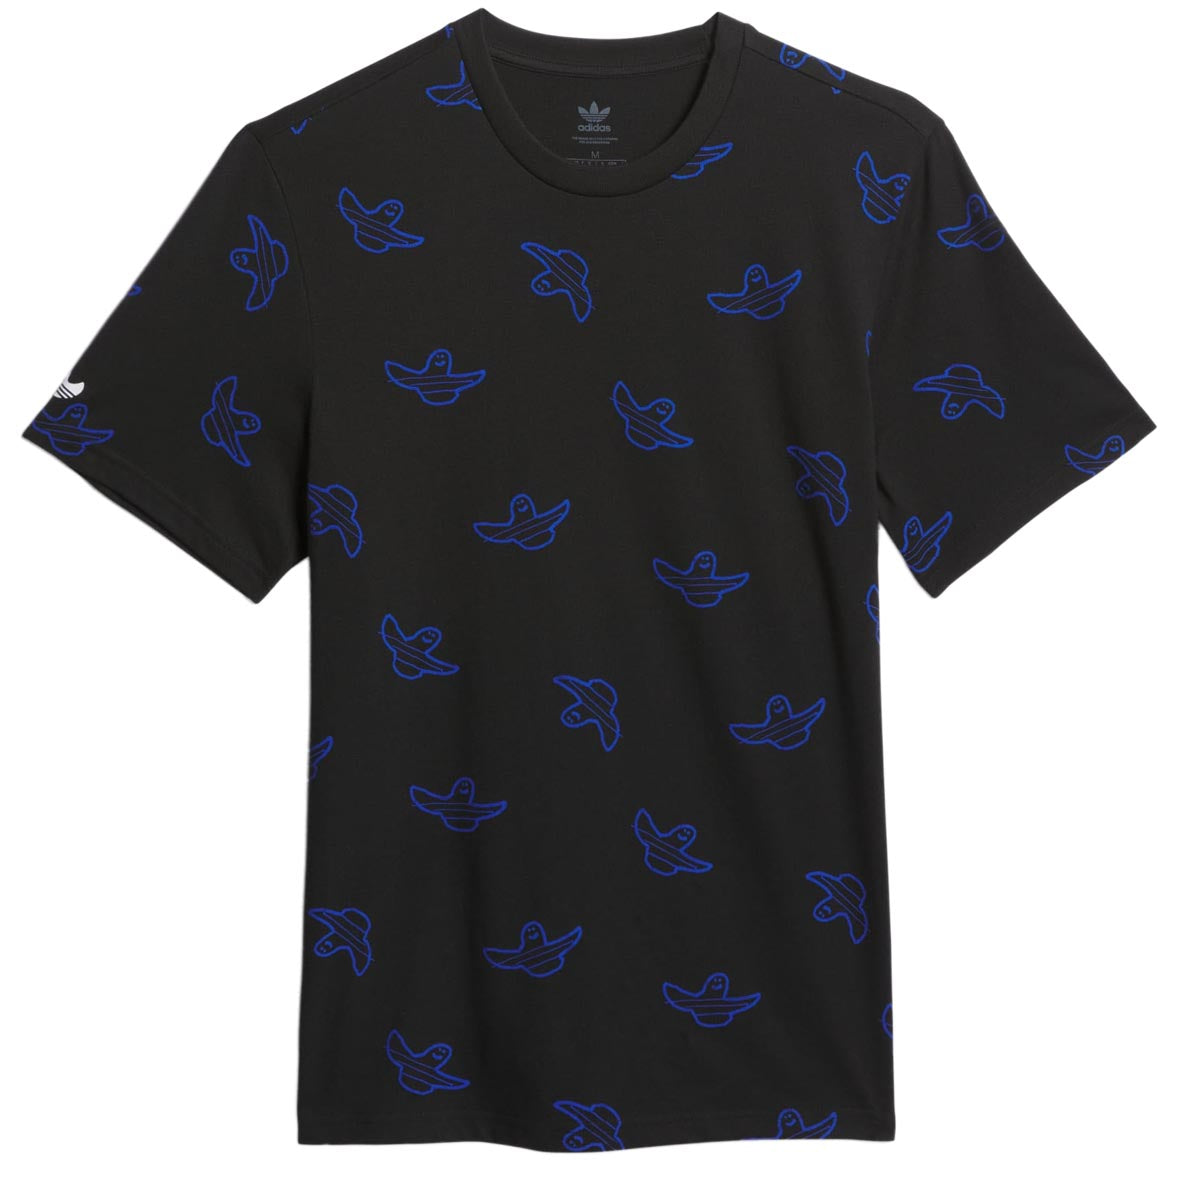 Adidas Shmoofoil All-Over-Print T-Shirt - Black/Royal Blue image 1